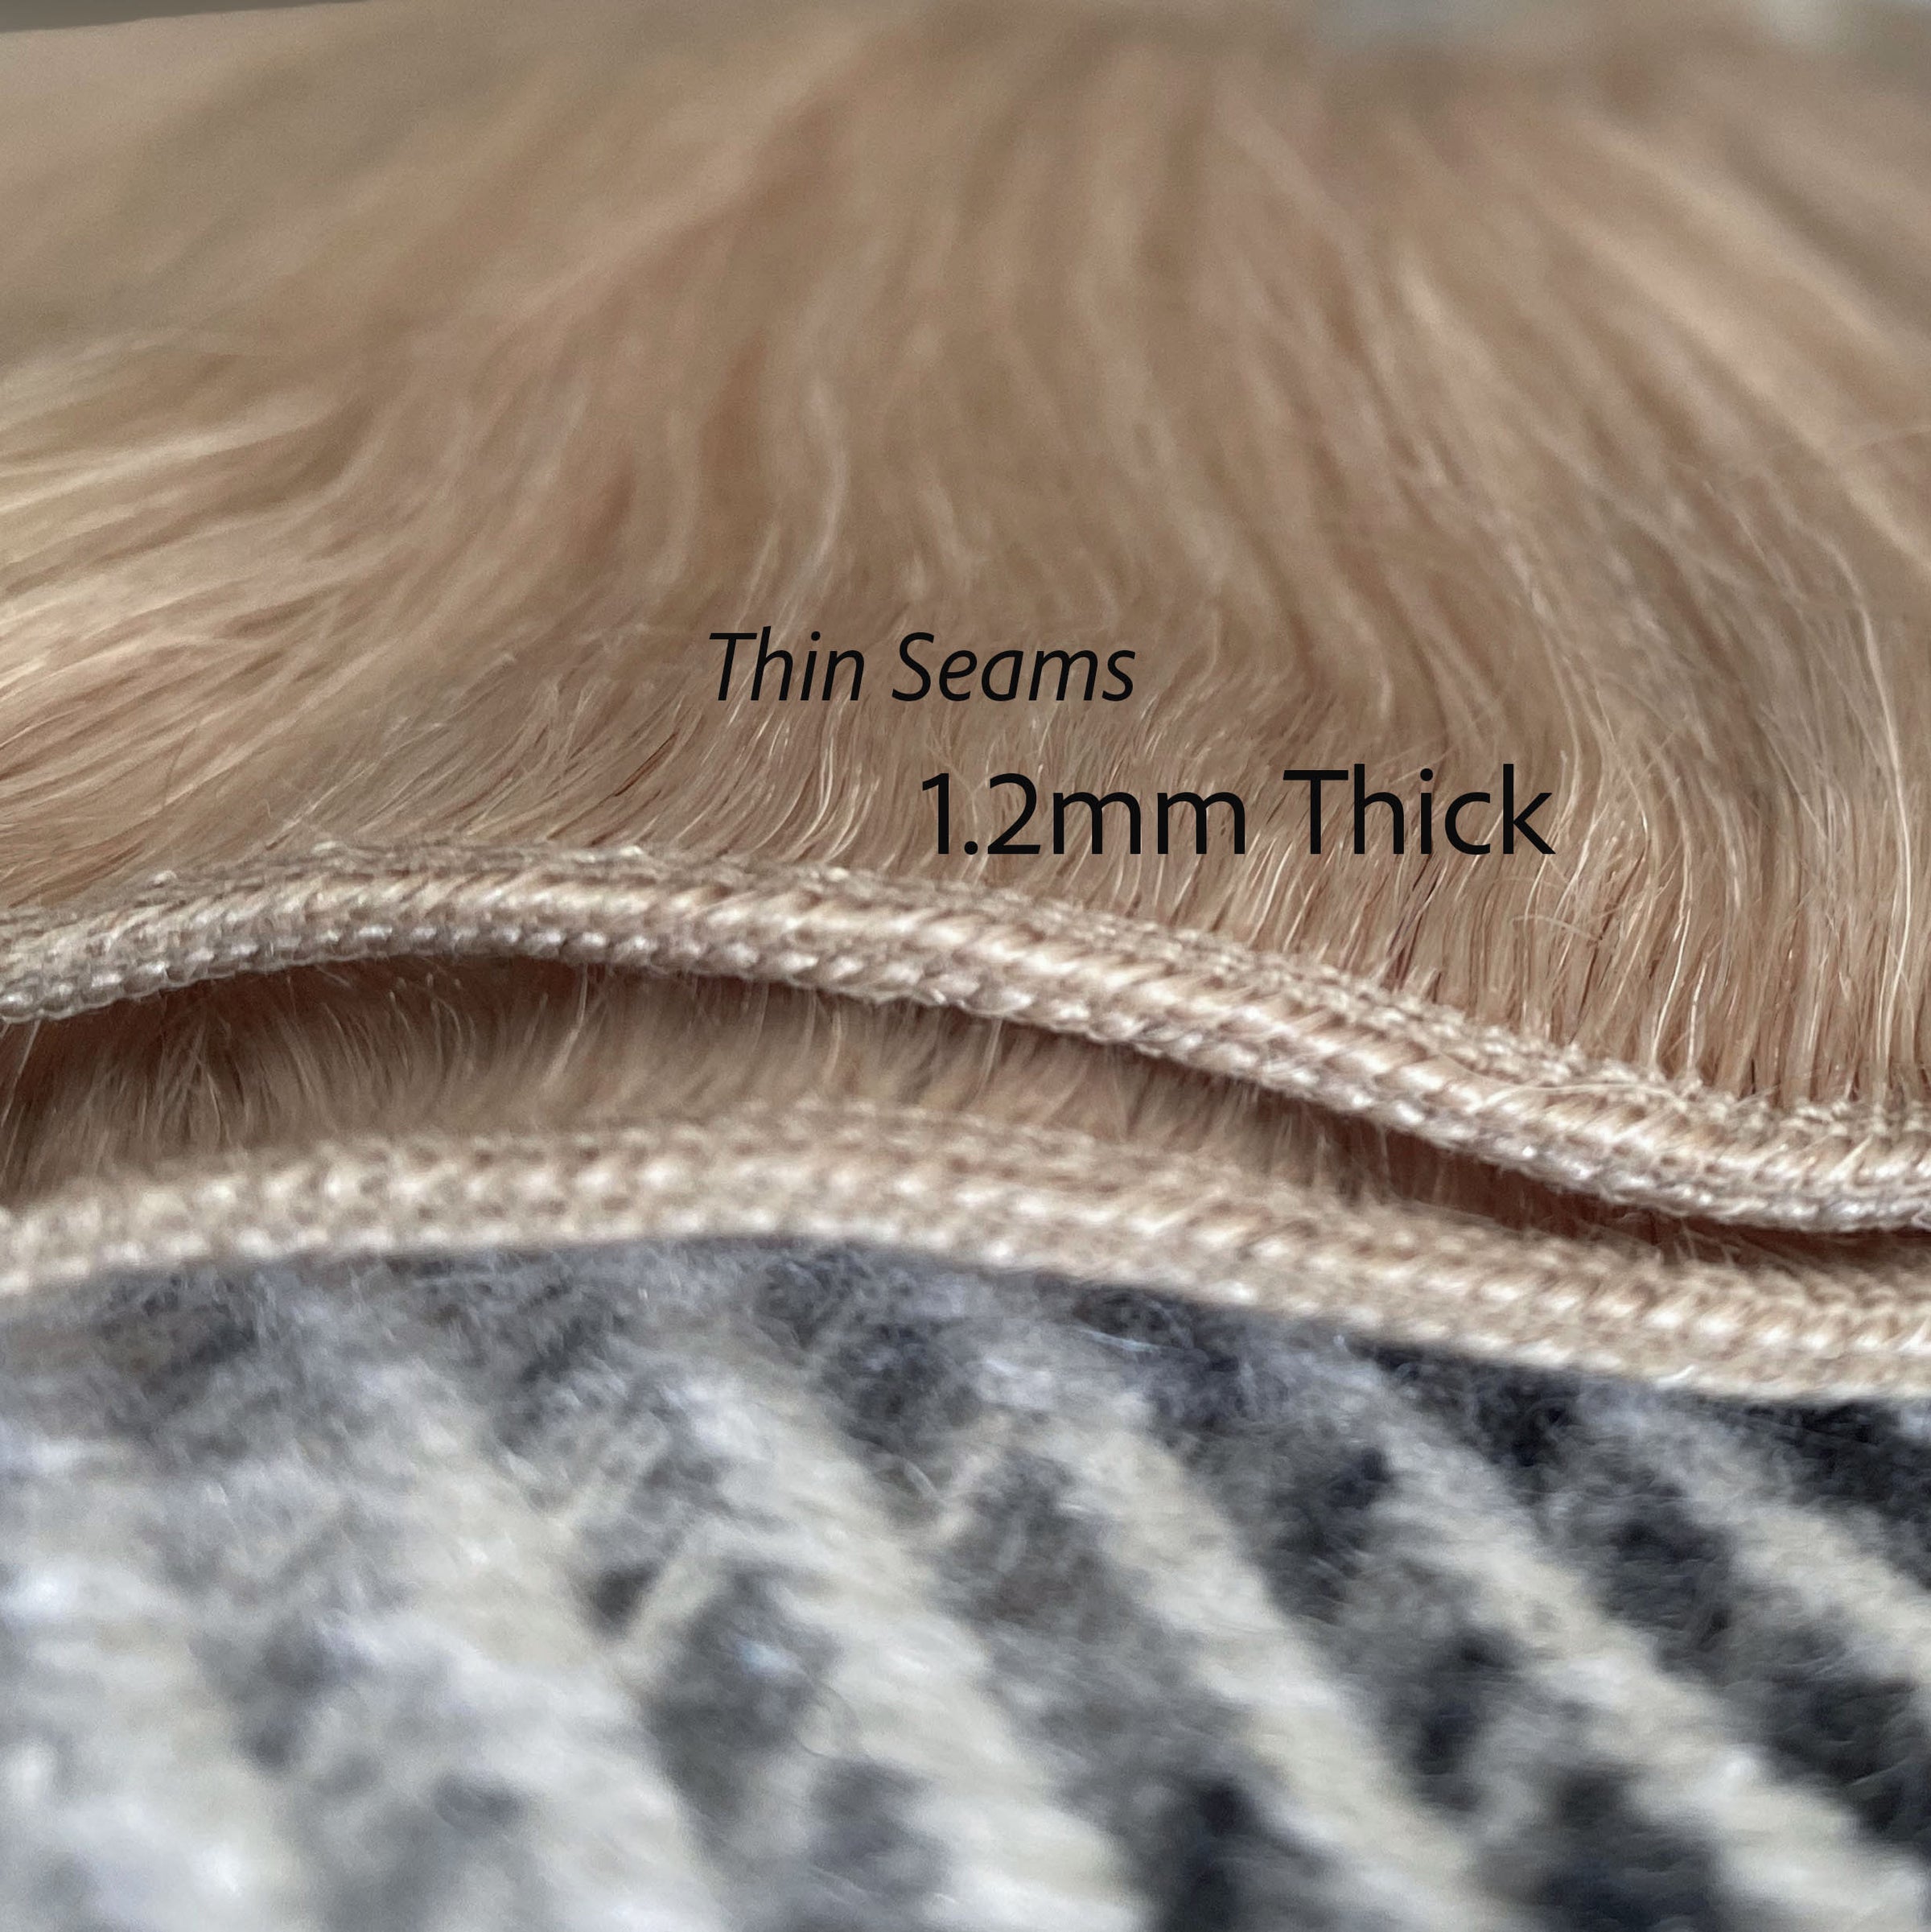 Weft Hair Extensions #12 Dirty Blonde 17” 60 Grams